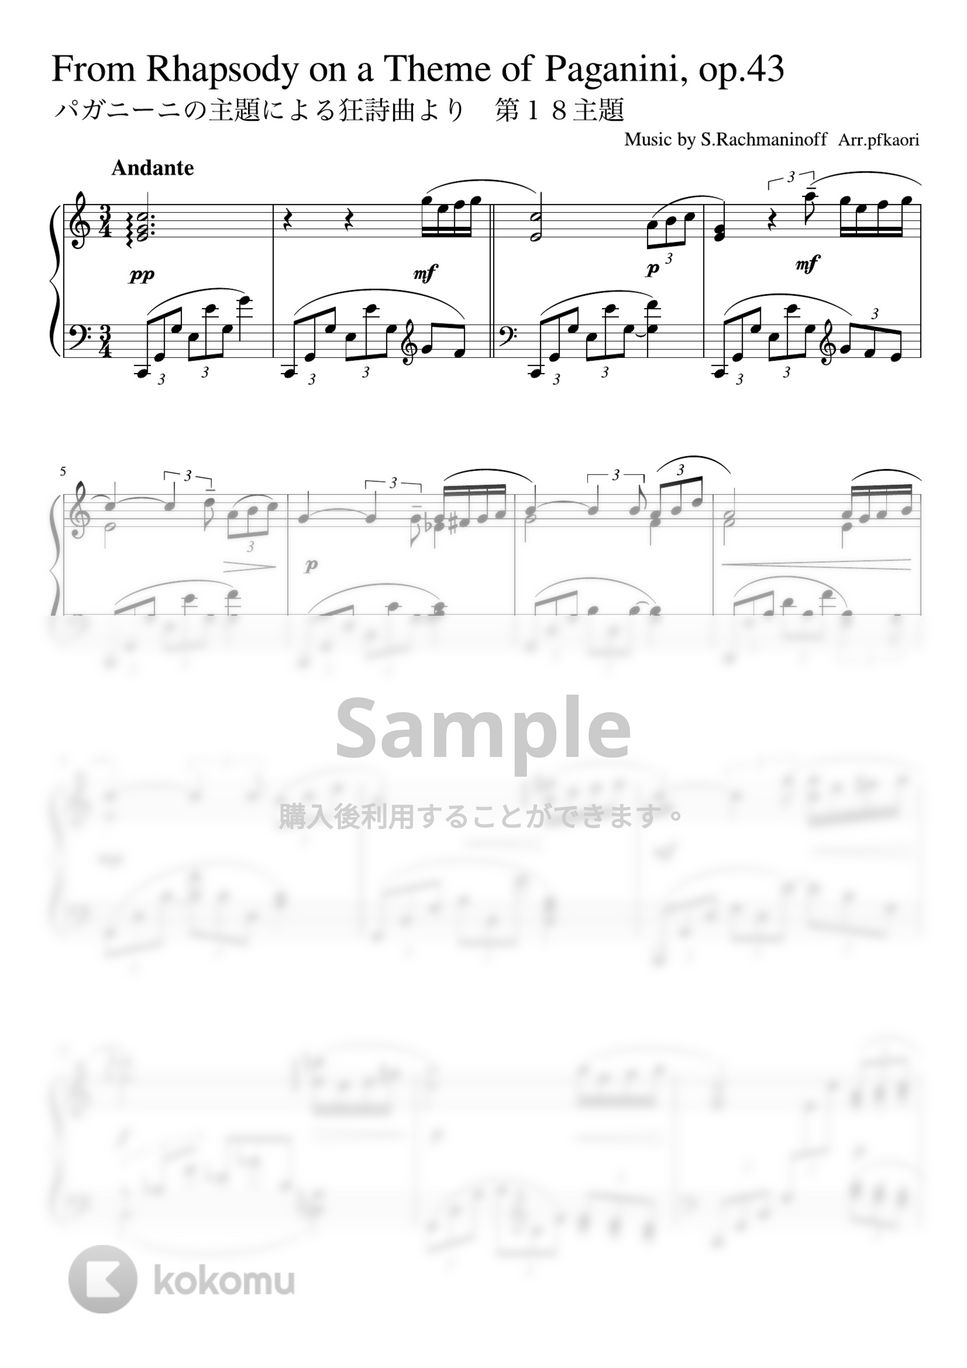 S.ラフマニノフ - パガニーニの主題による狂詩曲より第18変奏 (Cdur・ピアノソロ 初〜中級) by pfkaori